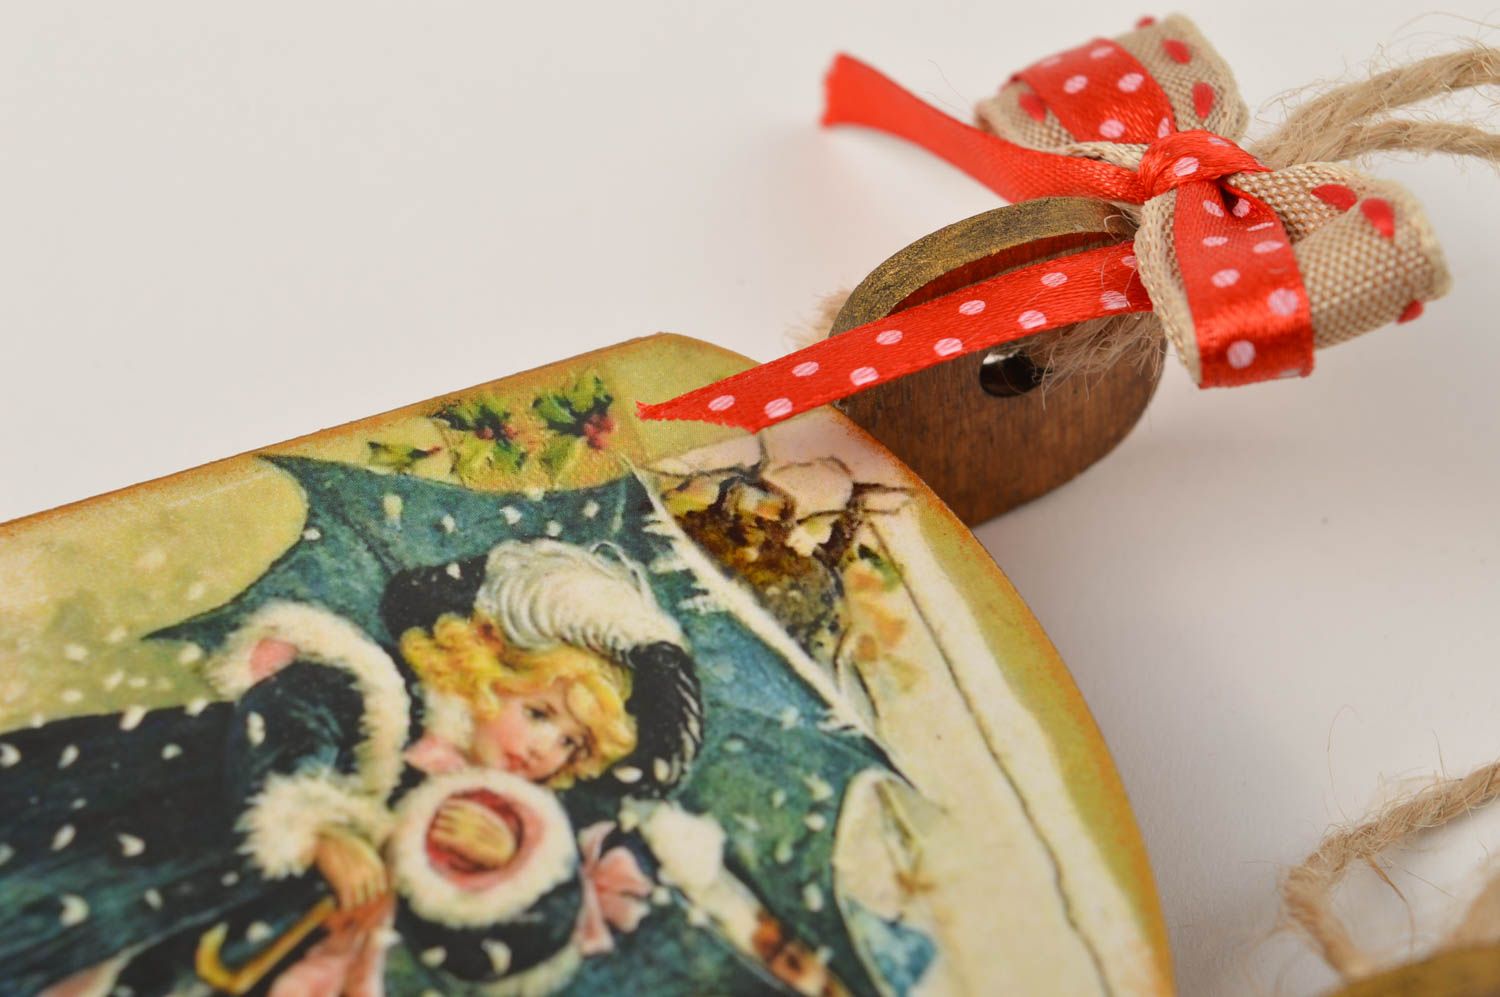 Adorno navideño casero hecho a mano elemento decorativo souvenir original foto 3